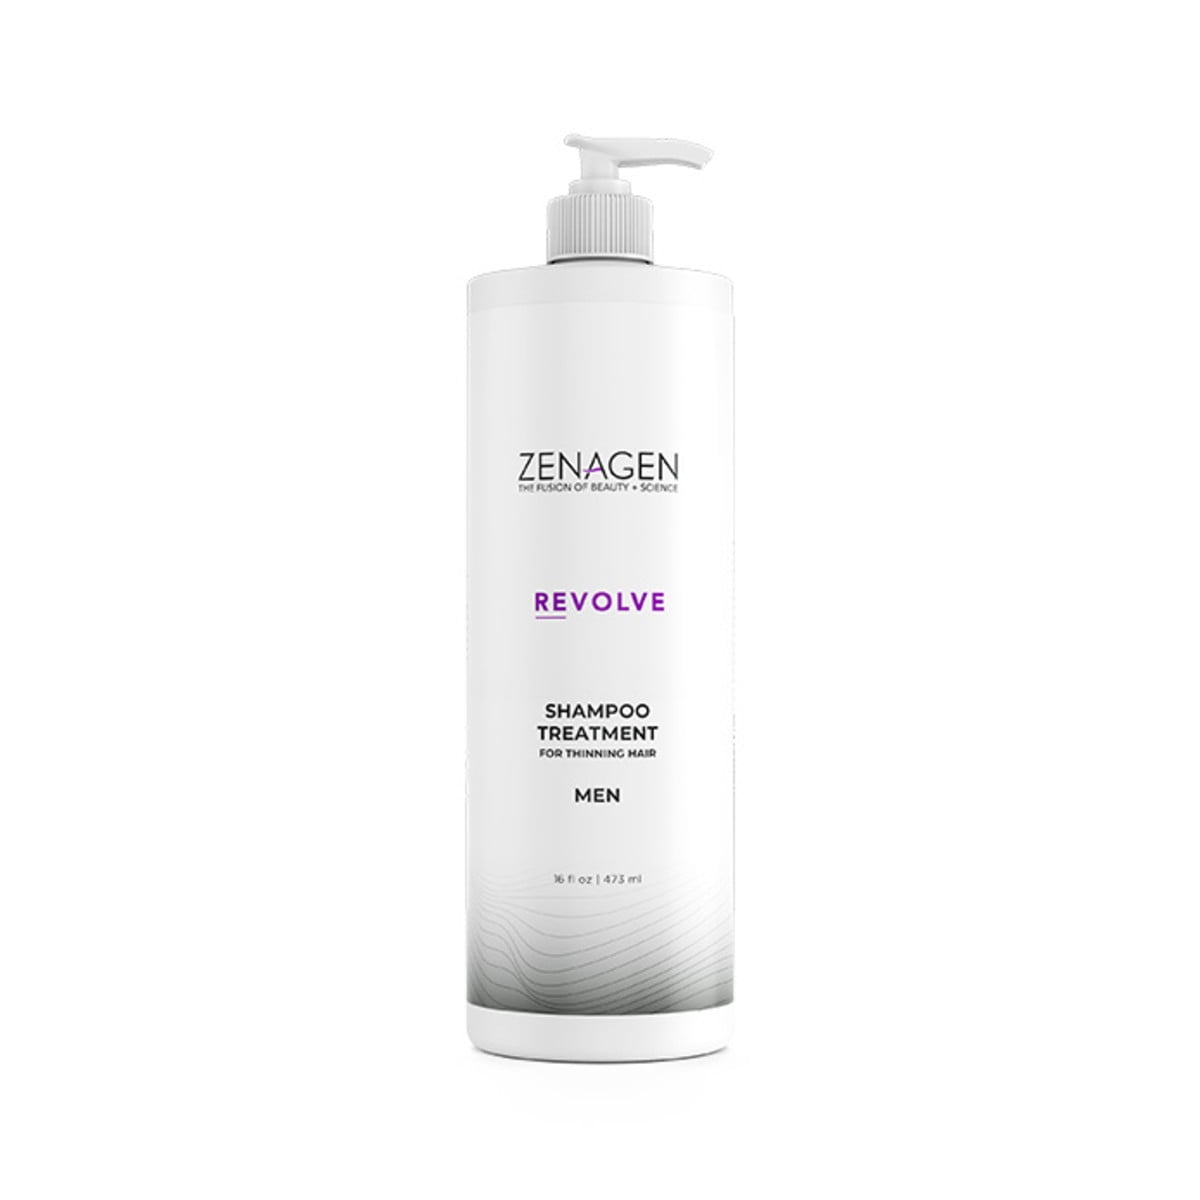 Zenagen Revolve Hair Loss Shampoo Treatment For Men Thickening Therapy 16 Oz